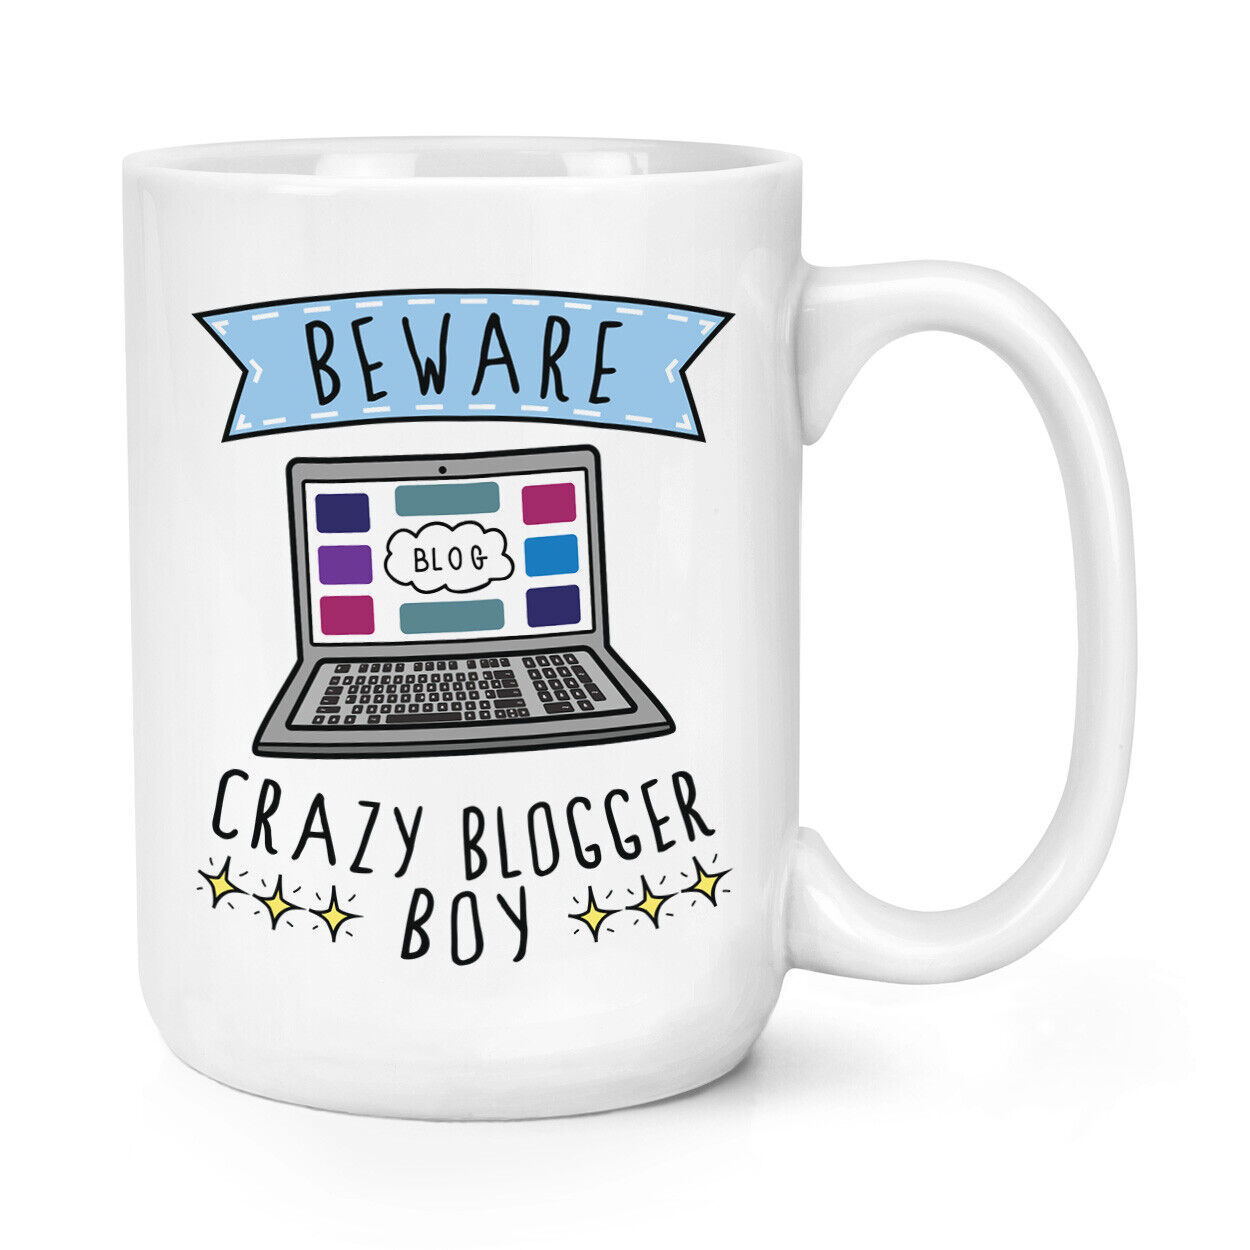 Beware Crazy Blogger Boy 15oz Large Mug Cup Funny Joke Blogging Son  5057698645612 | eBay